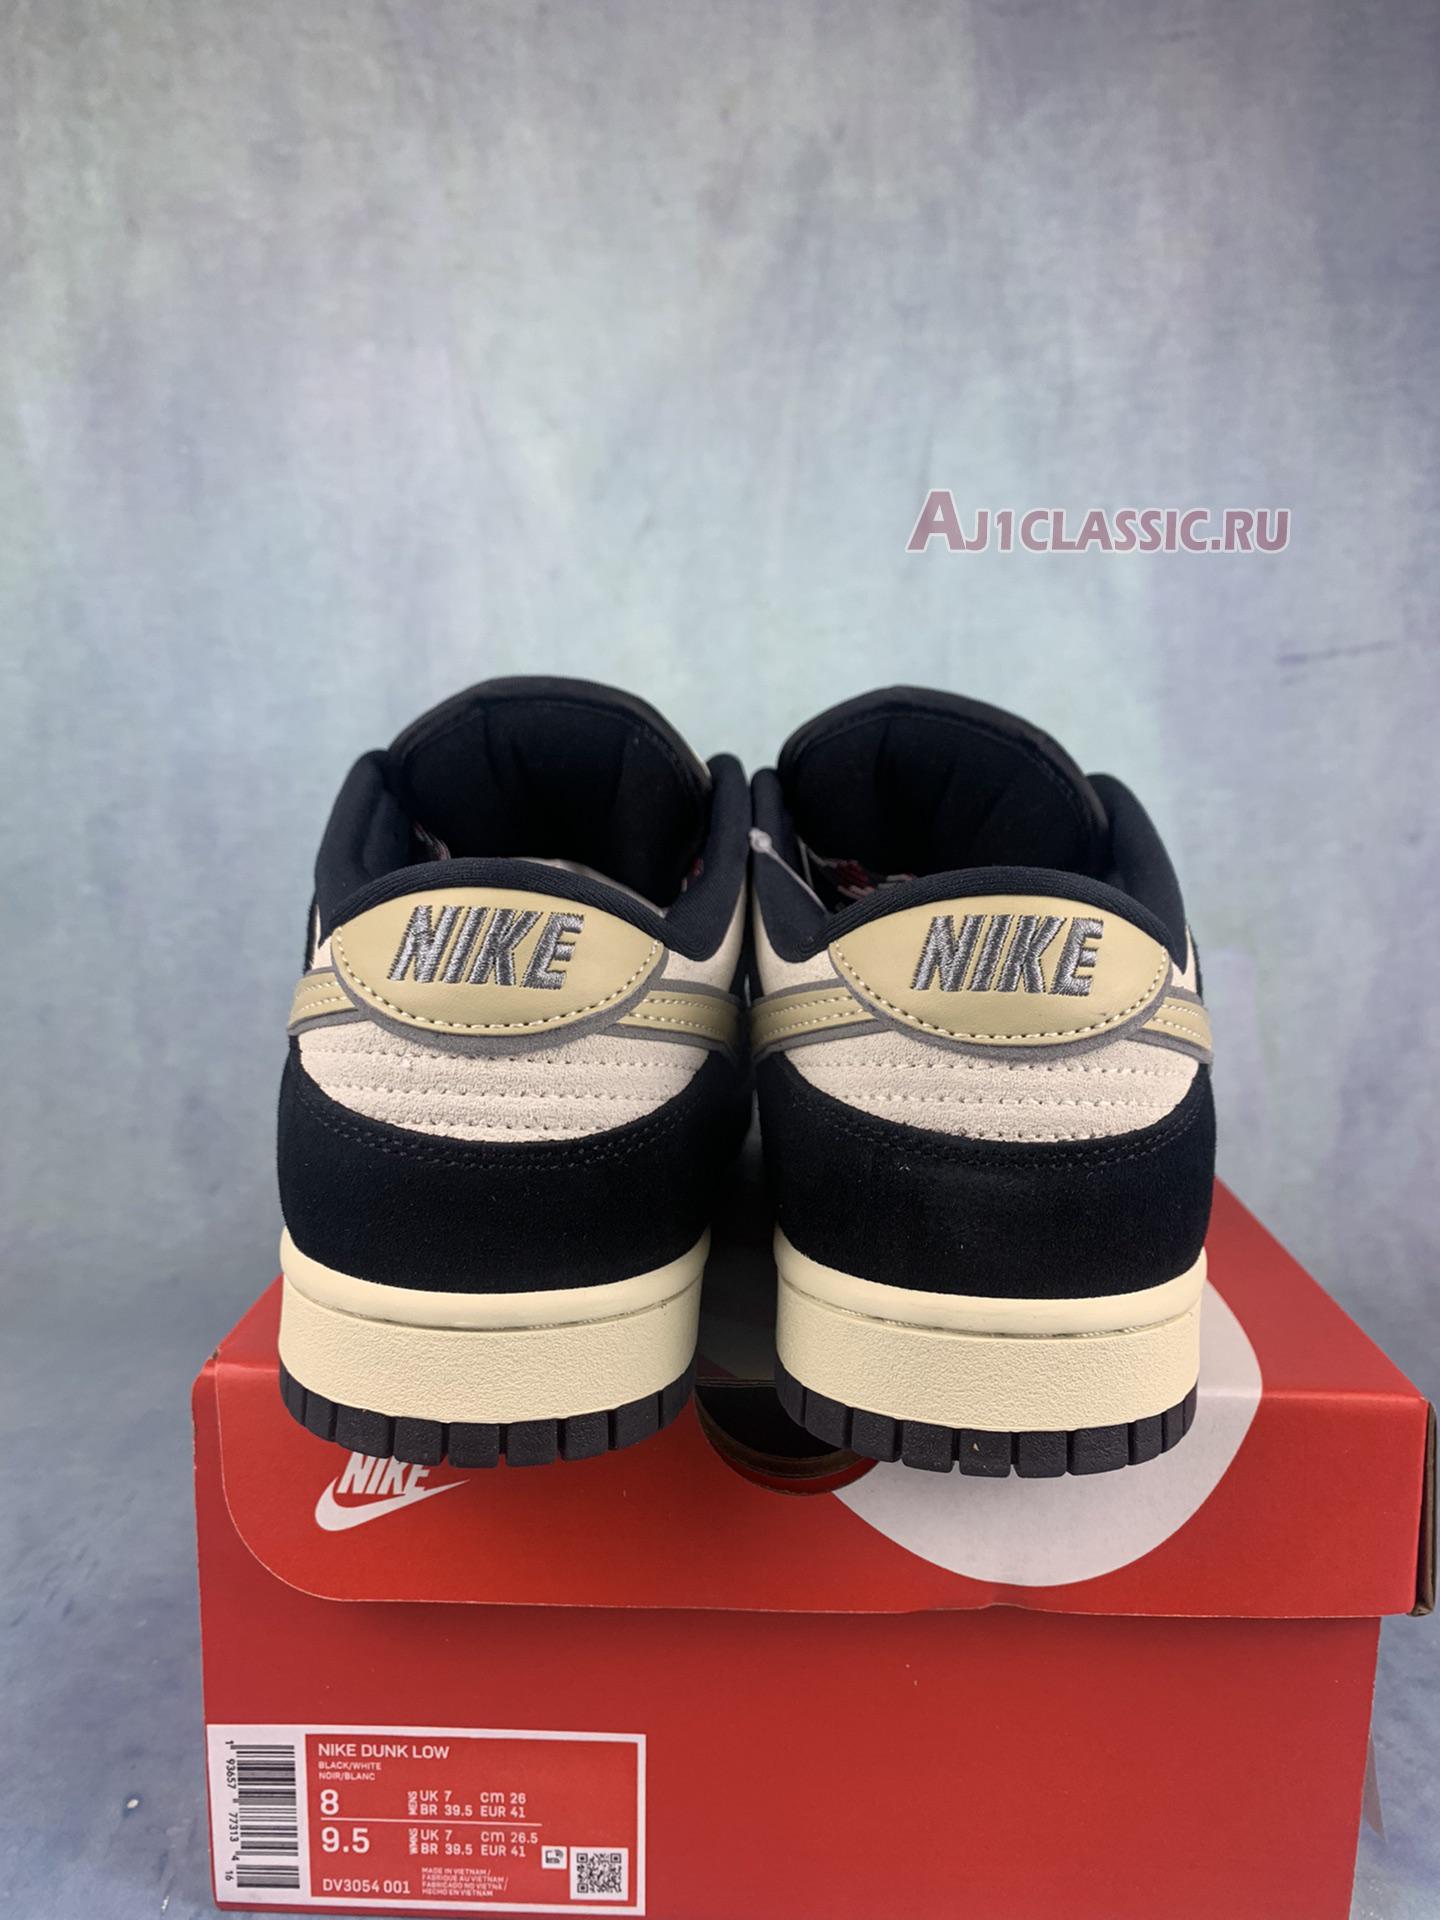 Nike Dunk Low "Black Suede" DV3054-001